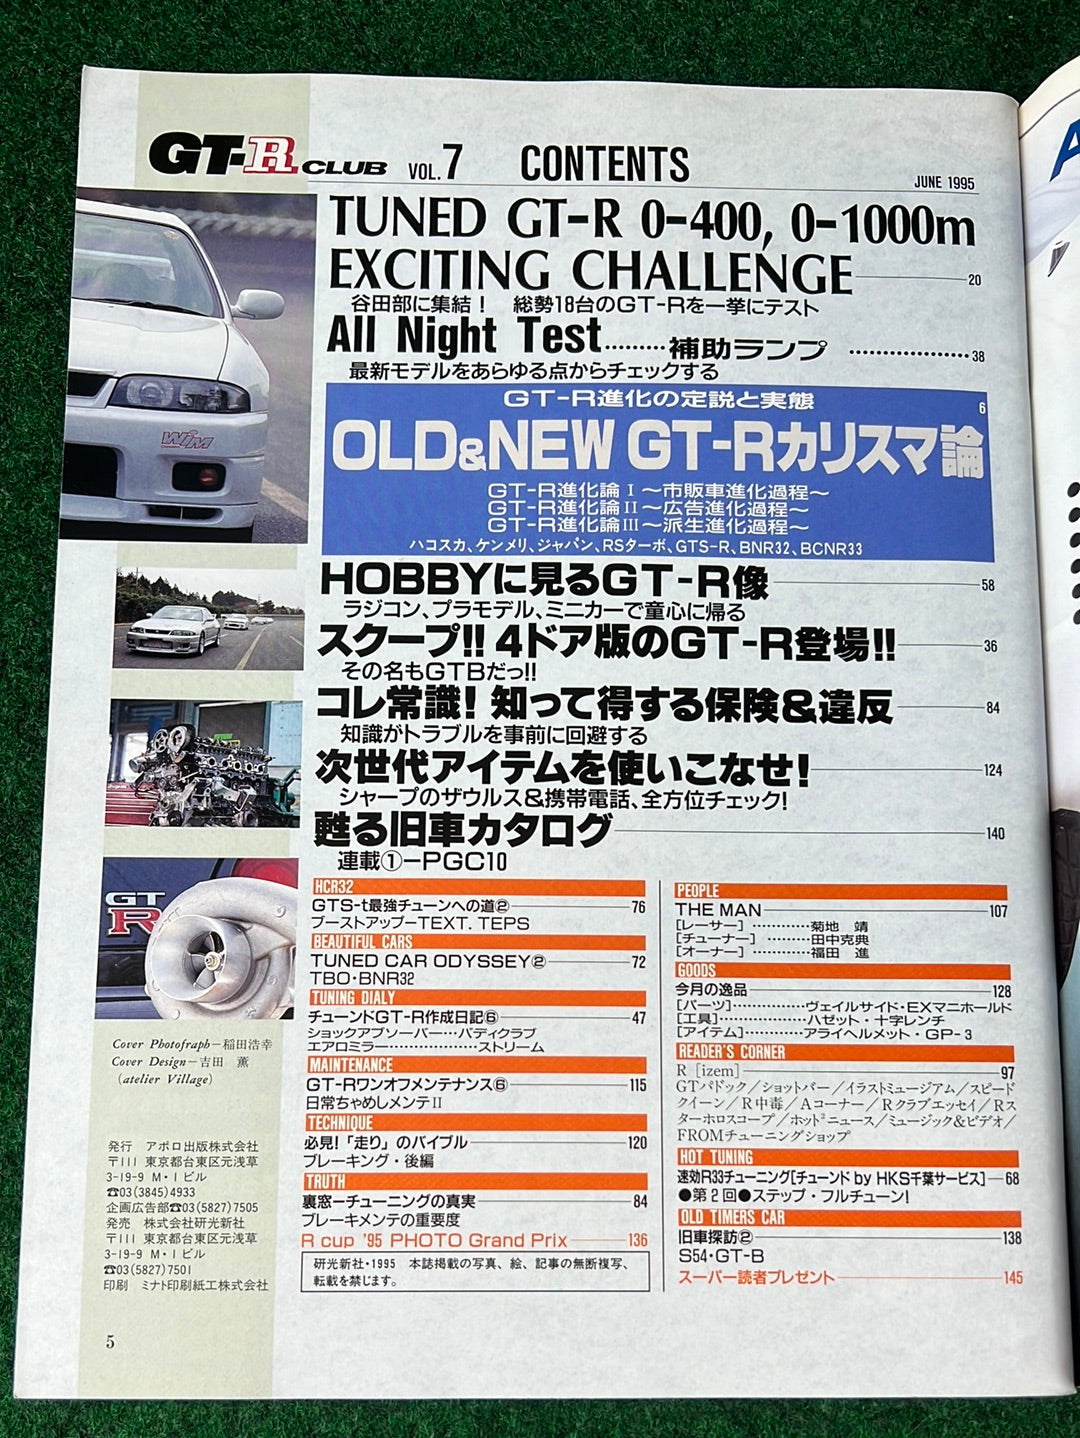 GT-R Club Magazine - Vol. 7